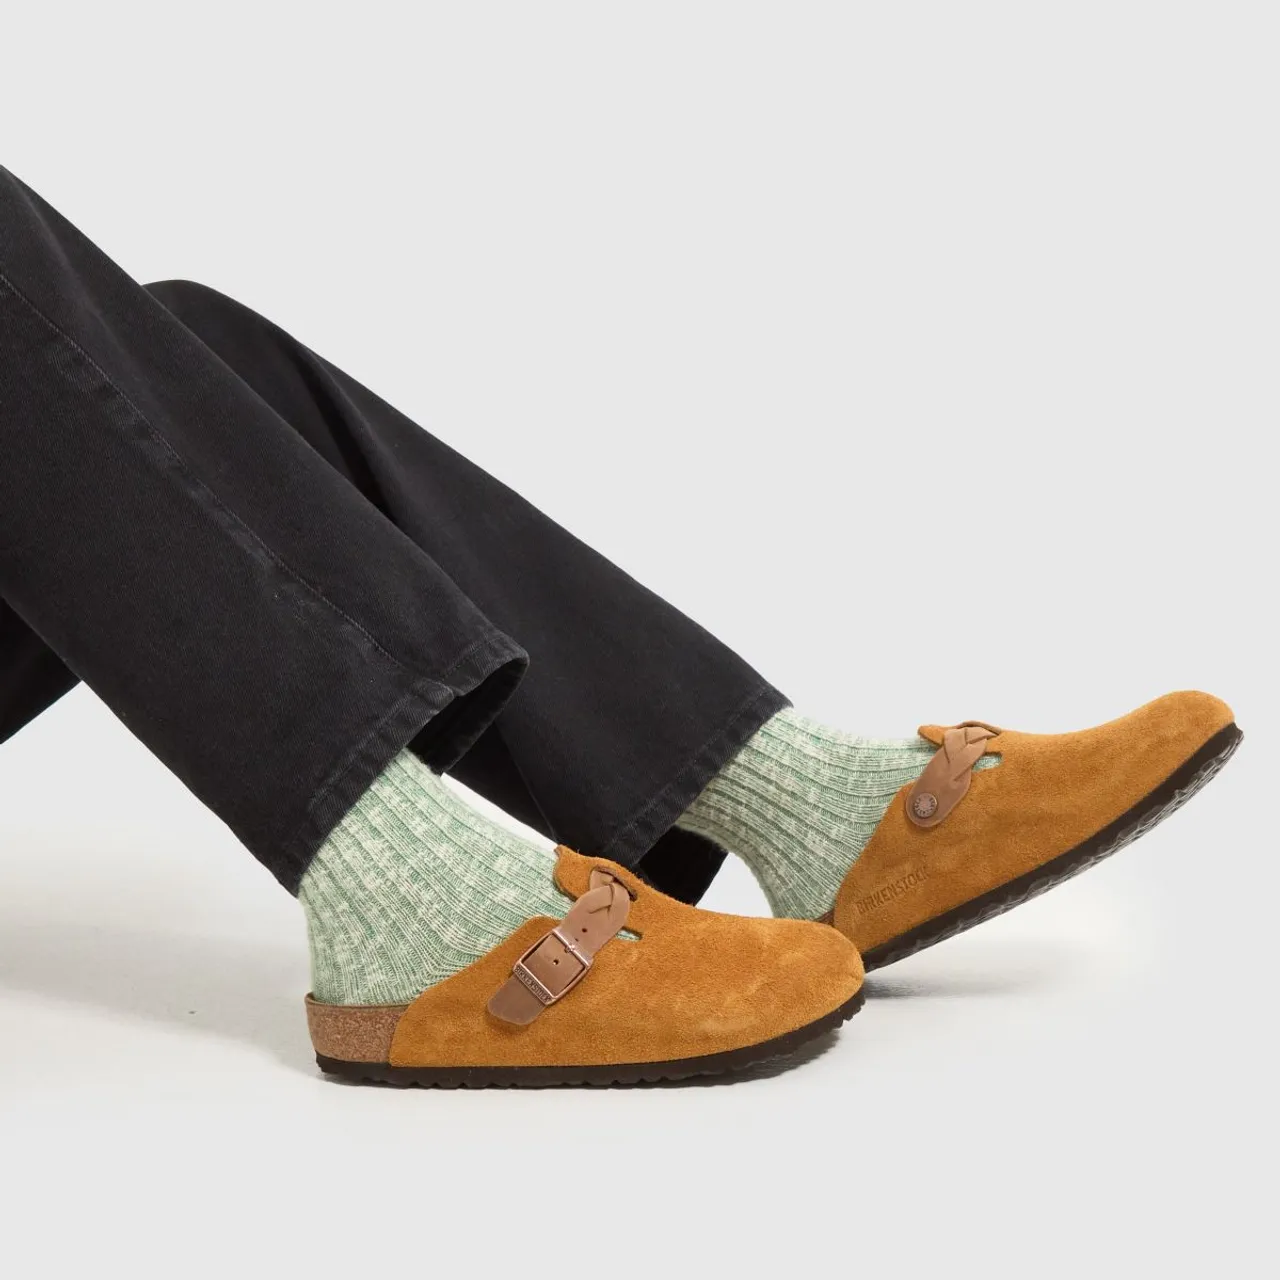 Birkenstock Boston Braided Clog Sandals in Tan